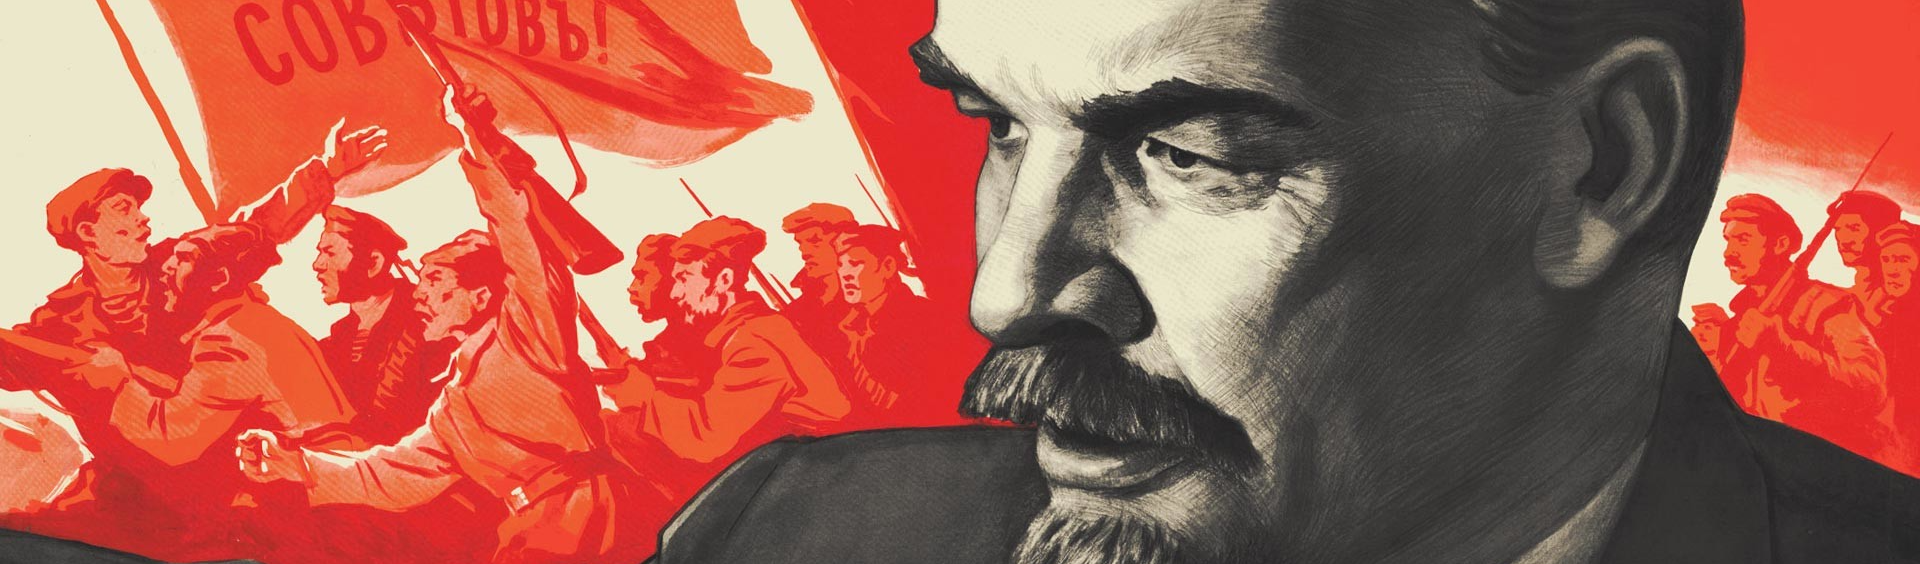 Miguel Urbano Rodrigues | Lenin e o imperialismo